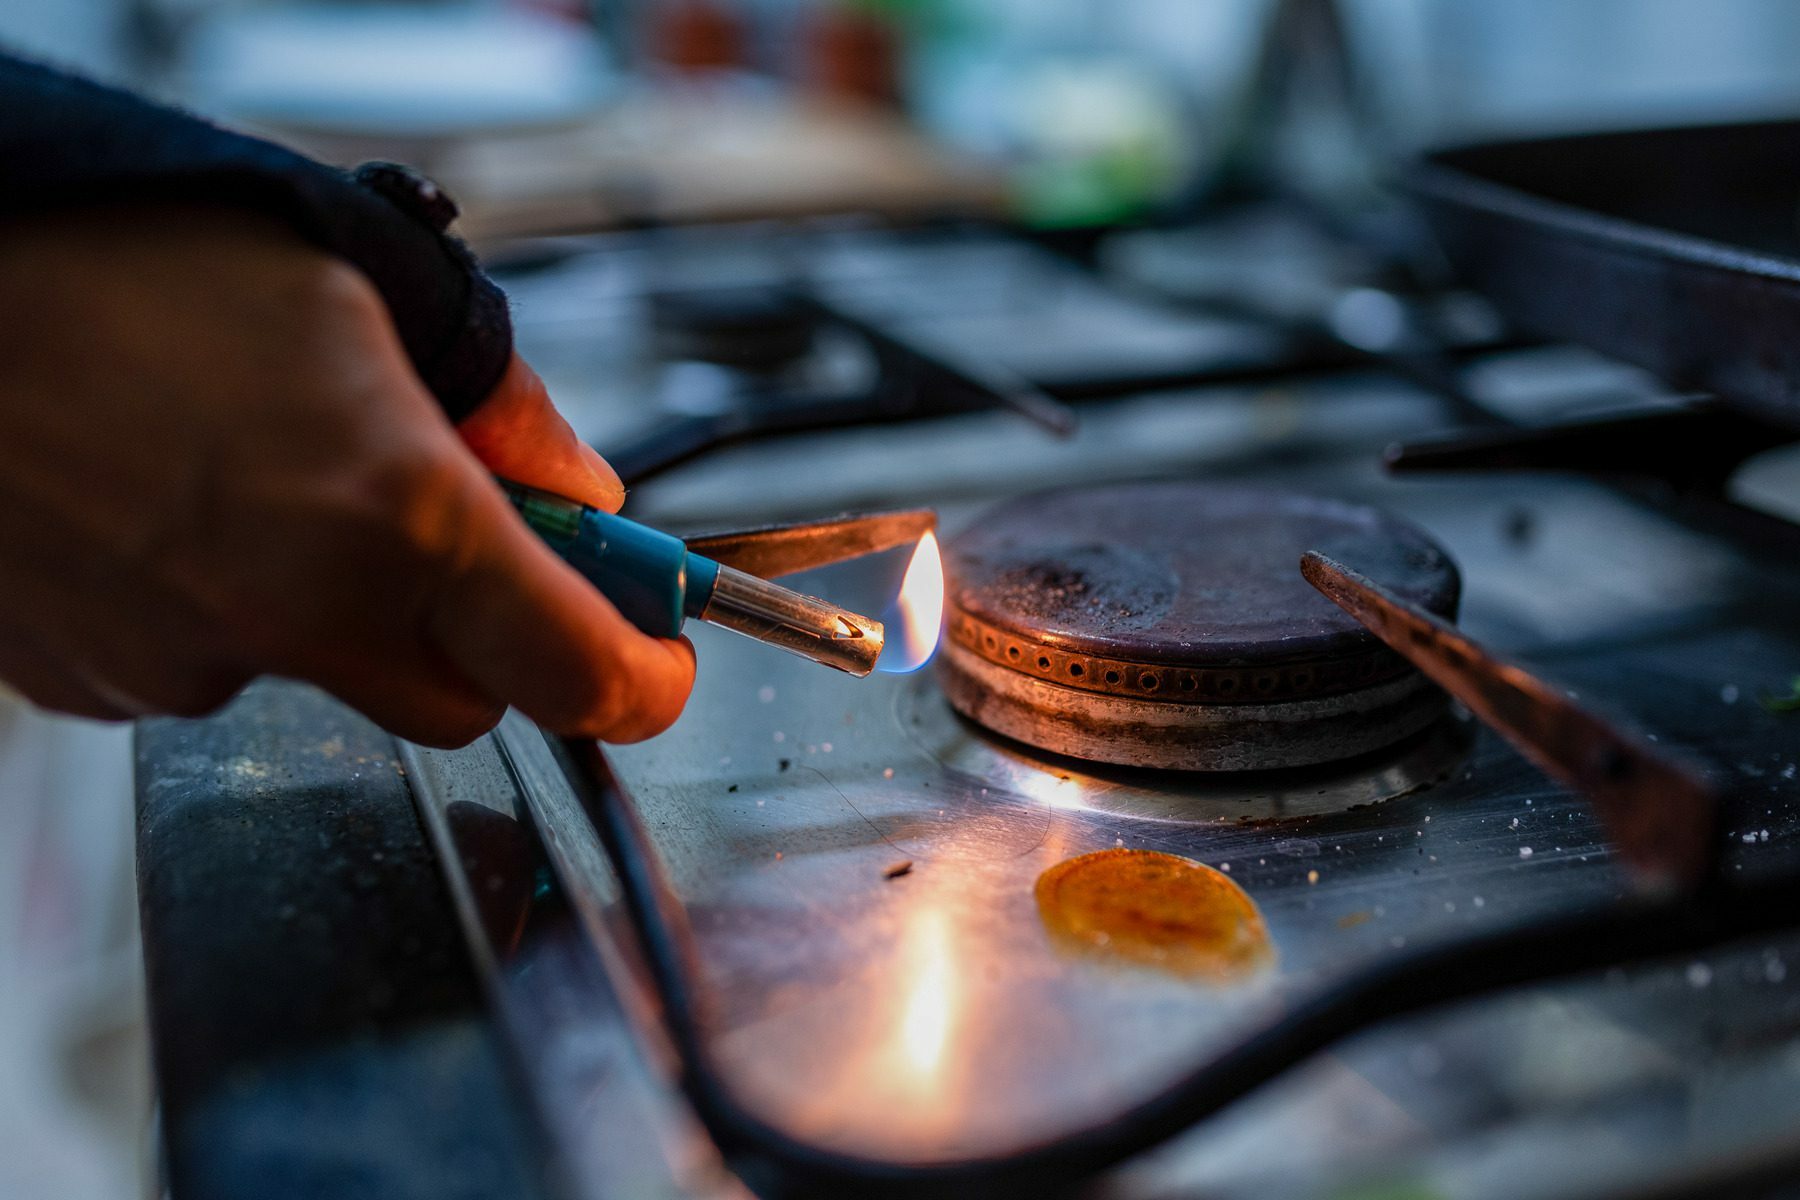 A person lights a gas burner inside a kitchen.